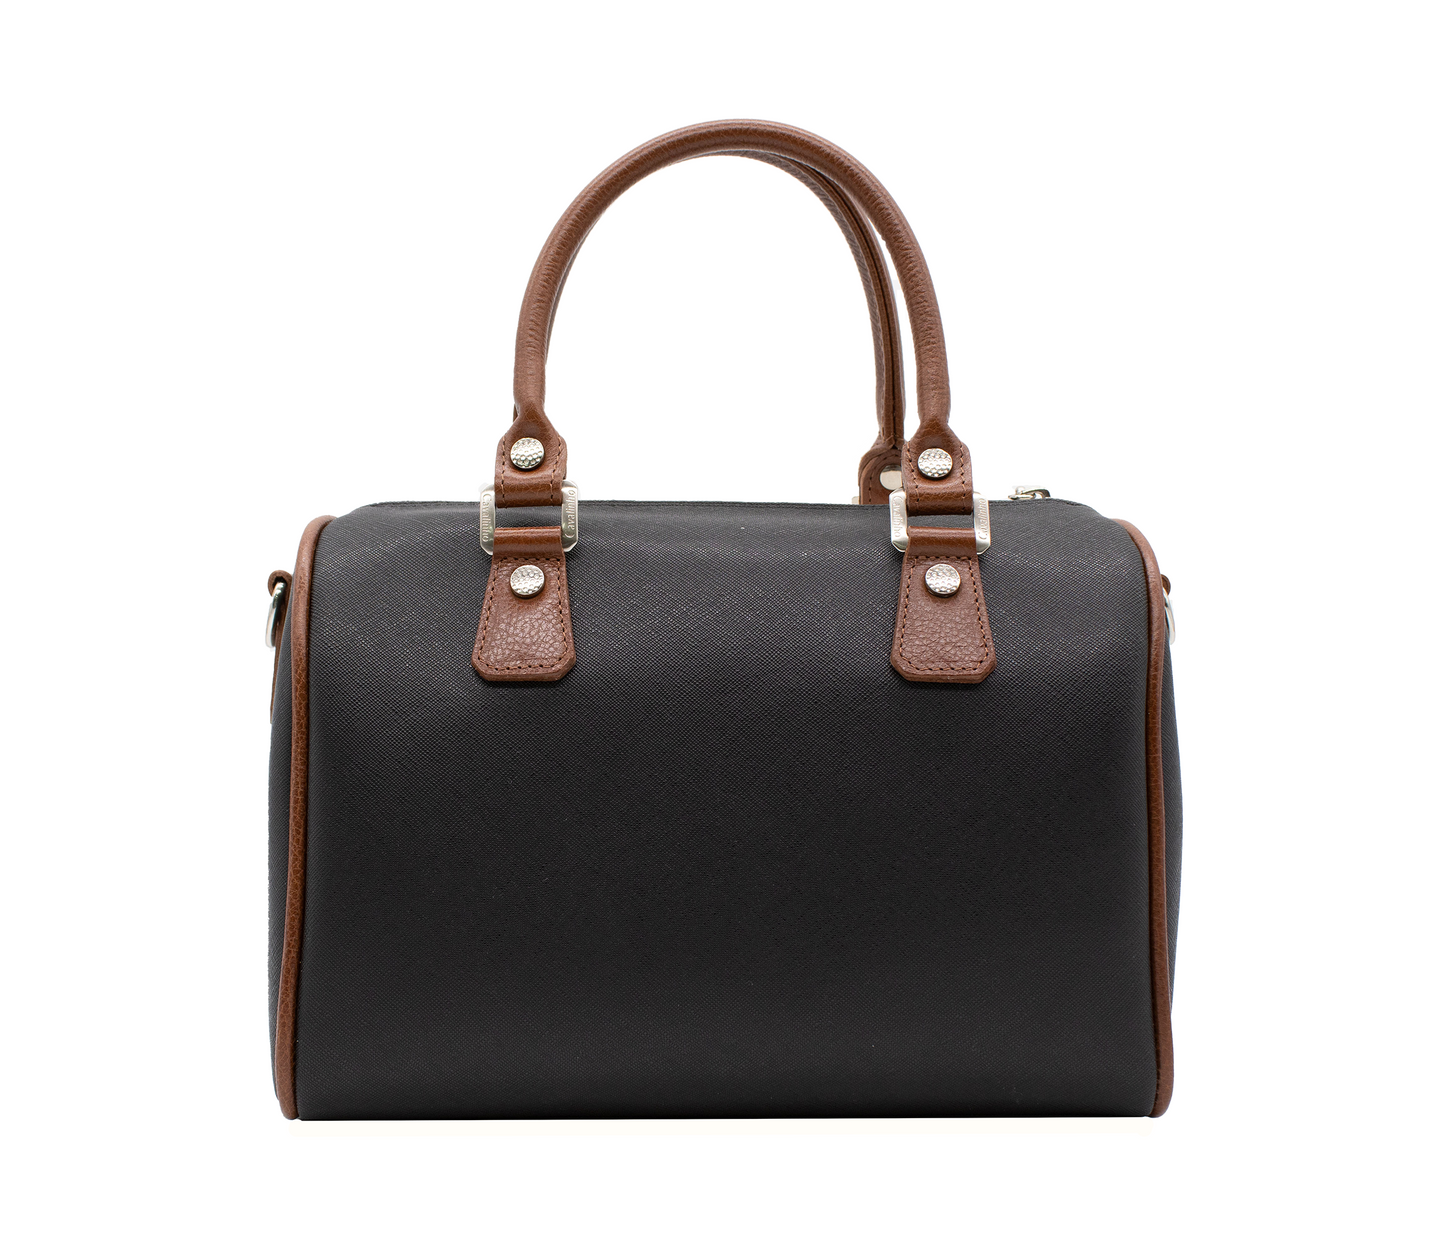 Cavalinho Lively Handbag - Black / Beige / White / SaddleBrown - 18130421.21_3